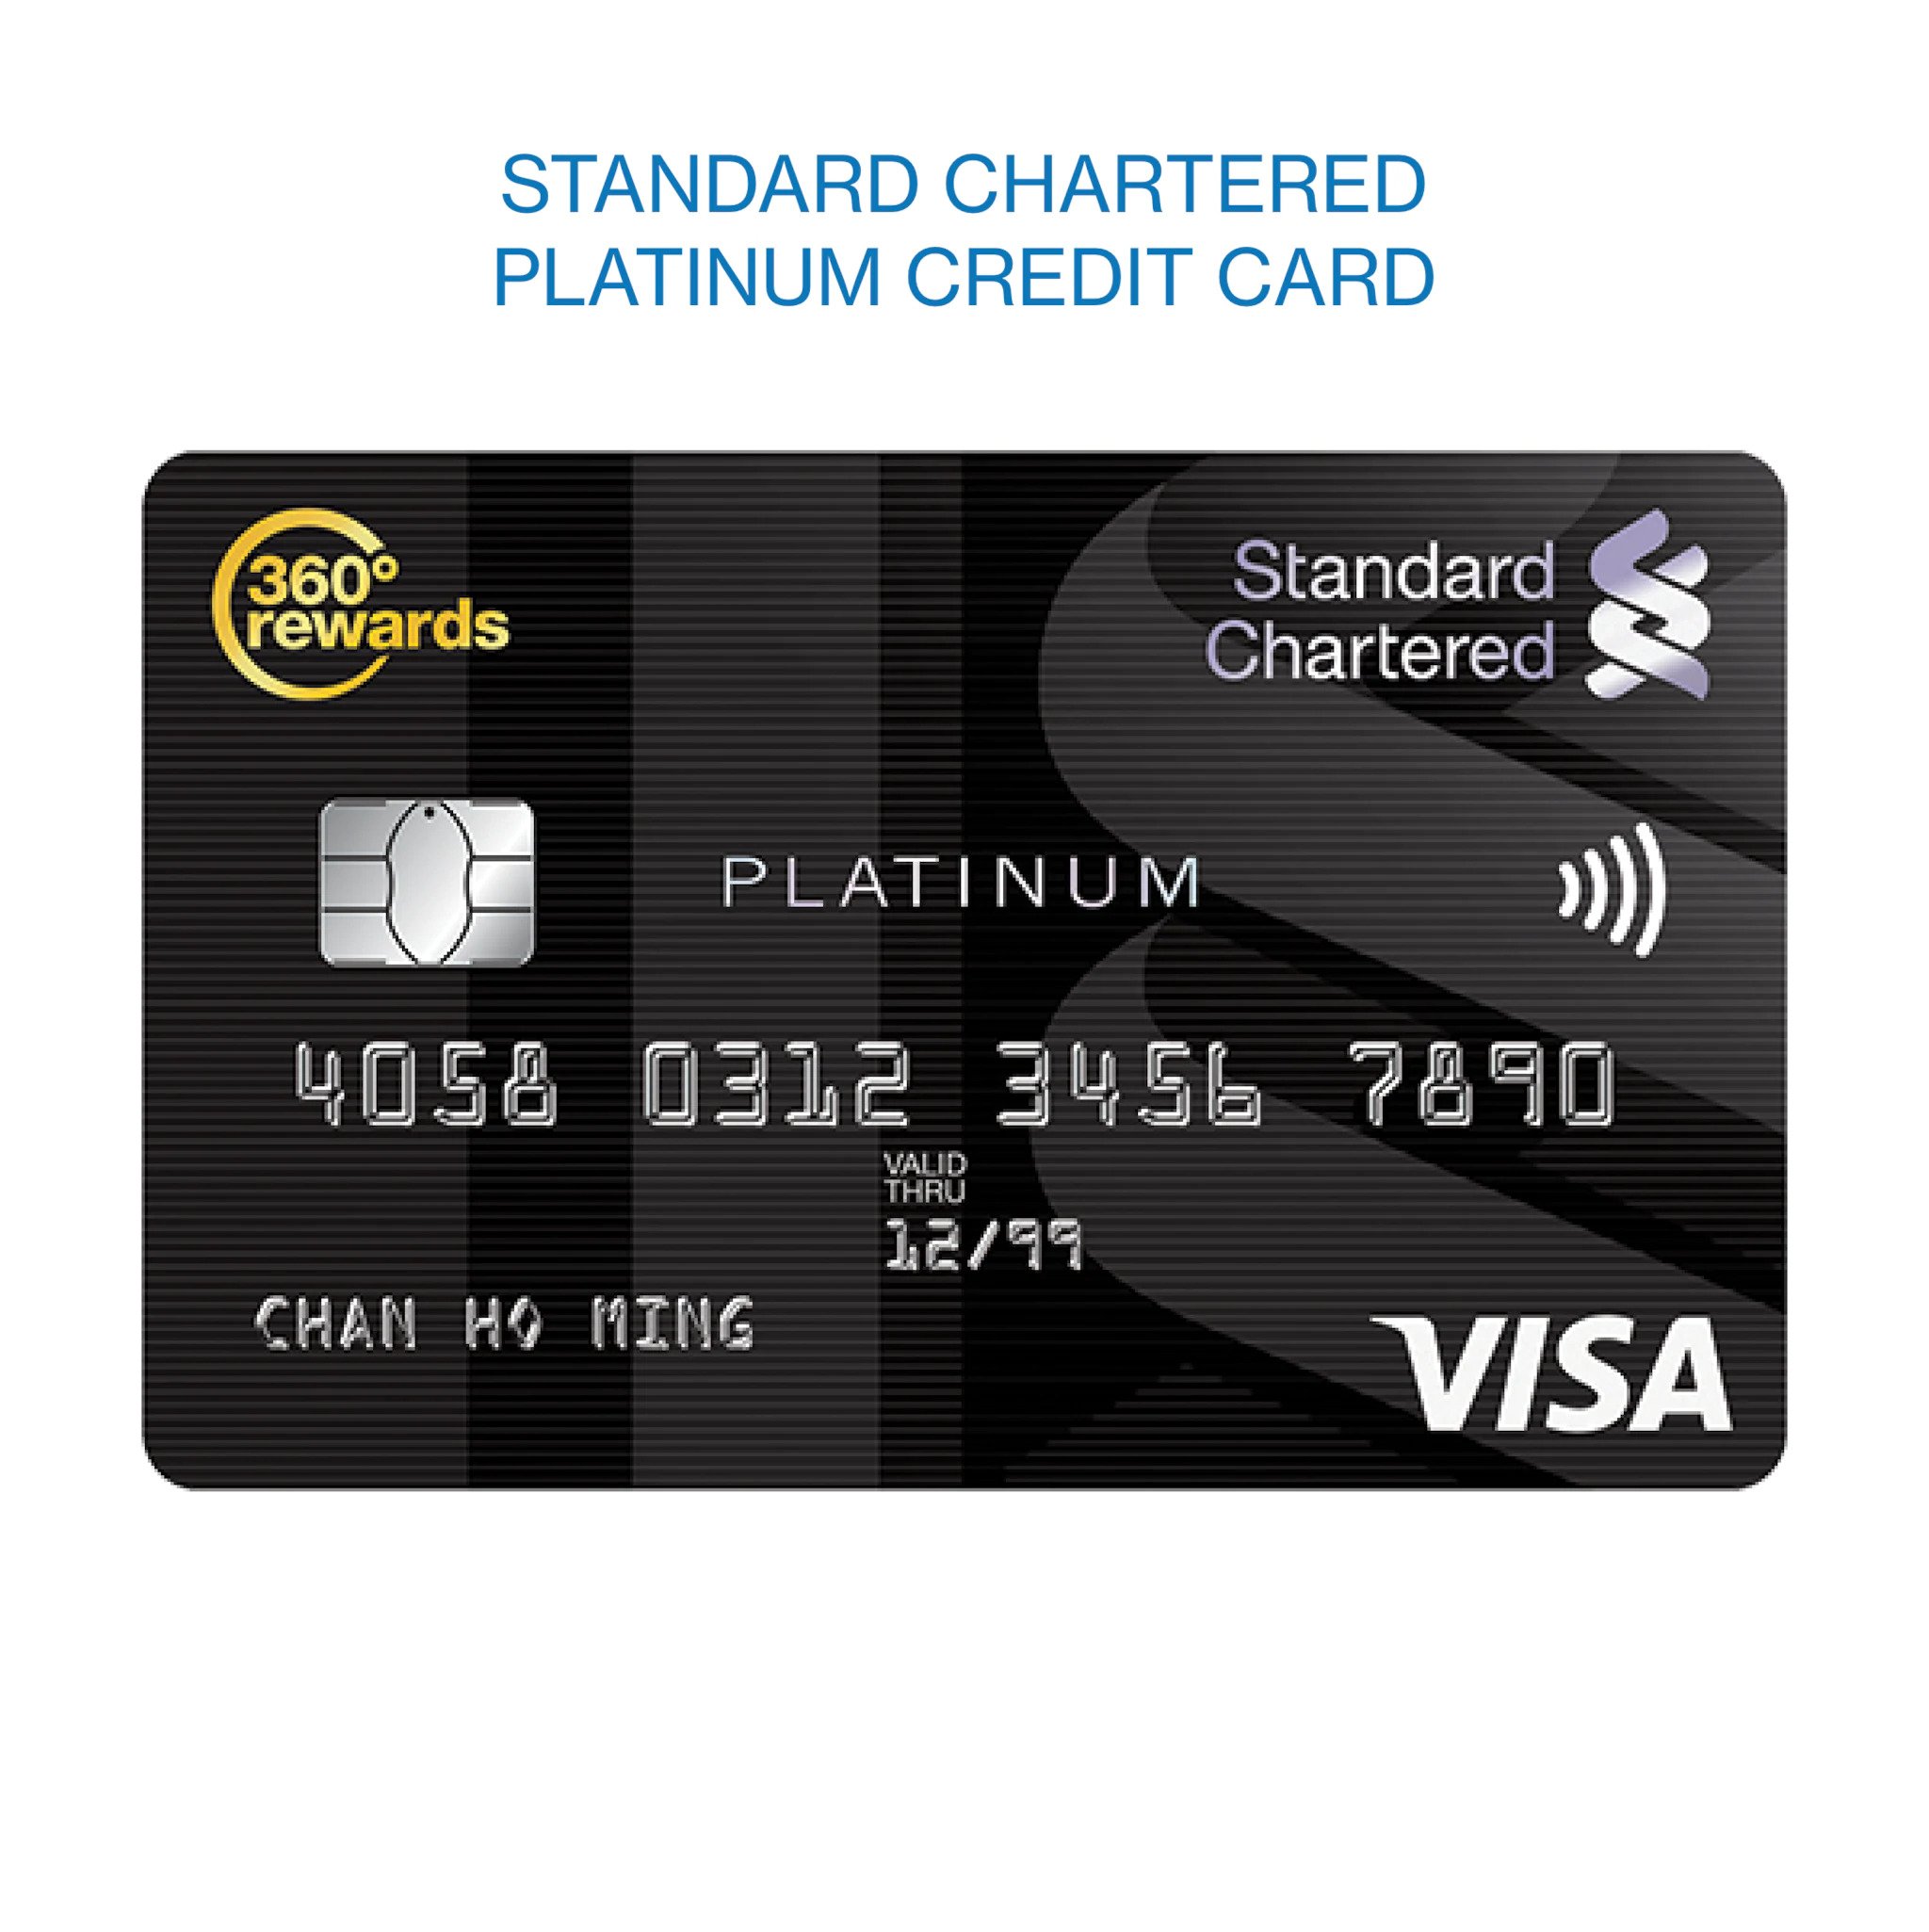 Standard chartered credit card